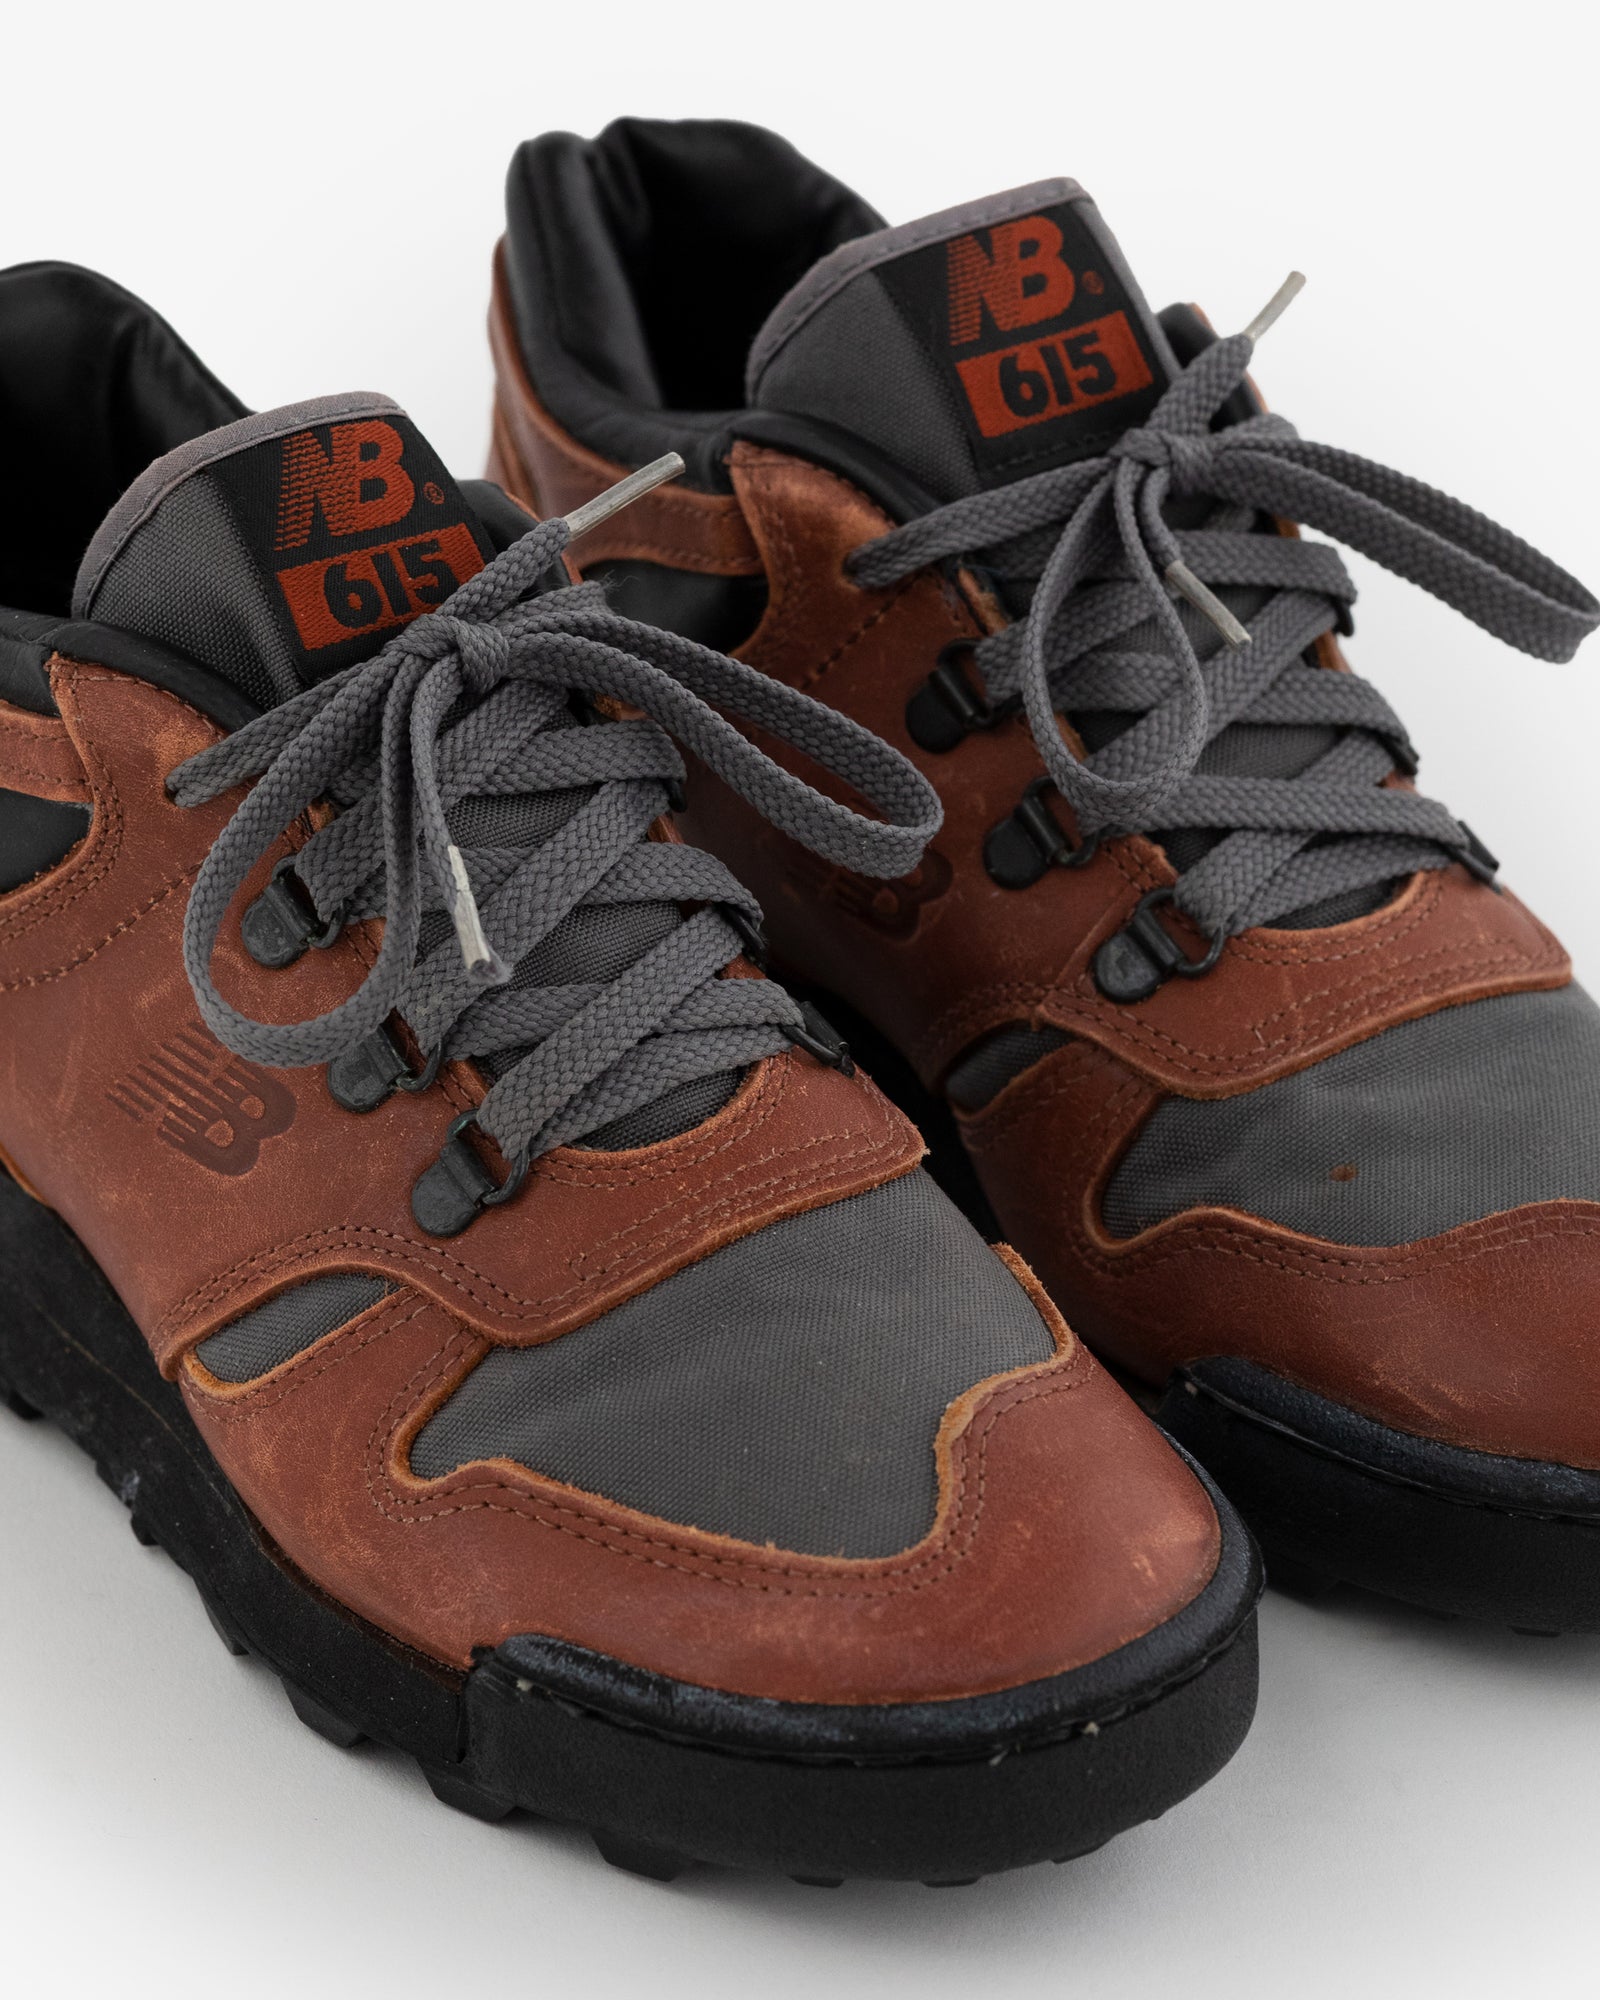 Vaciar la basura occidental Premonición Vintage 615 New Balance Hiking Boots – Aimé Leon Dore